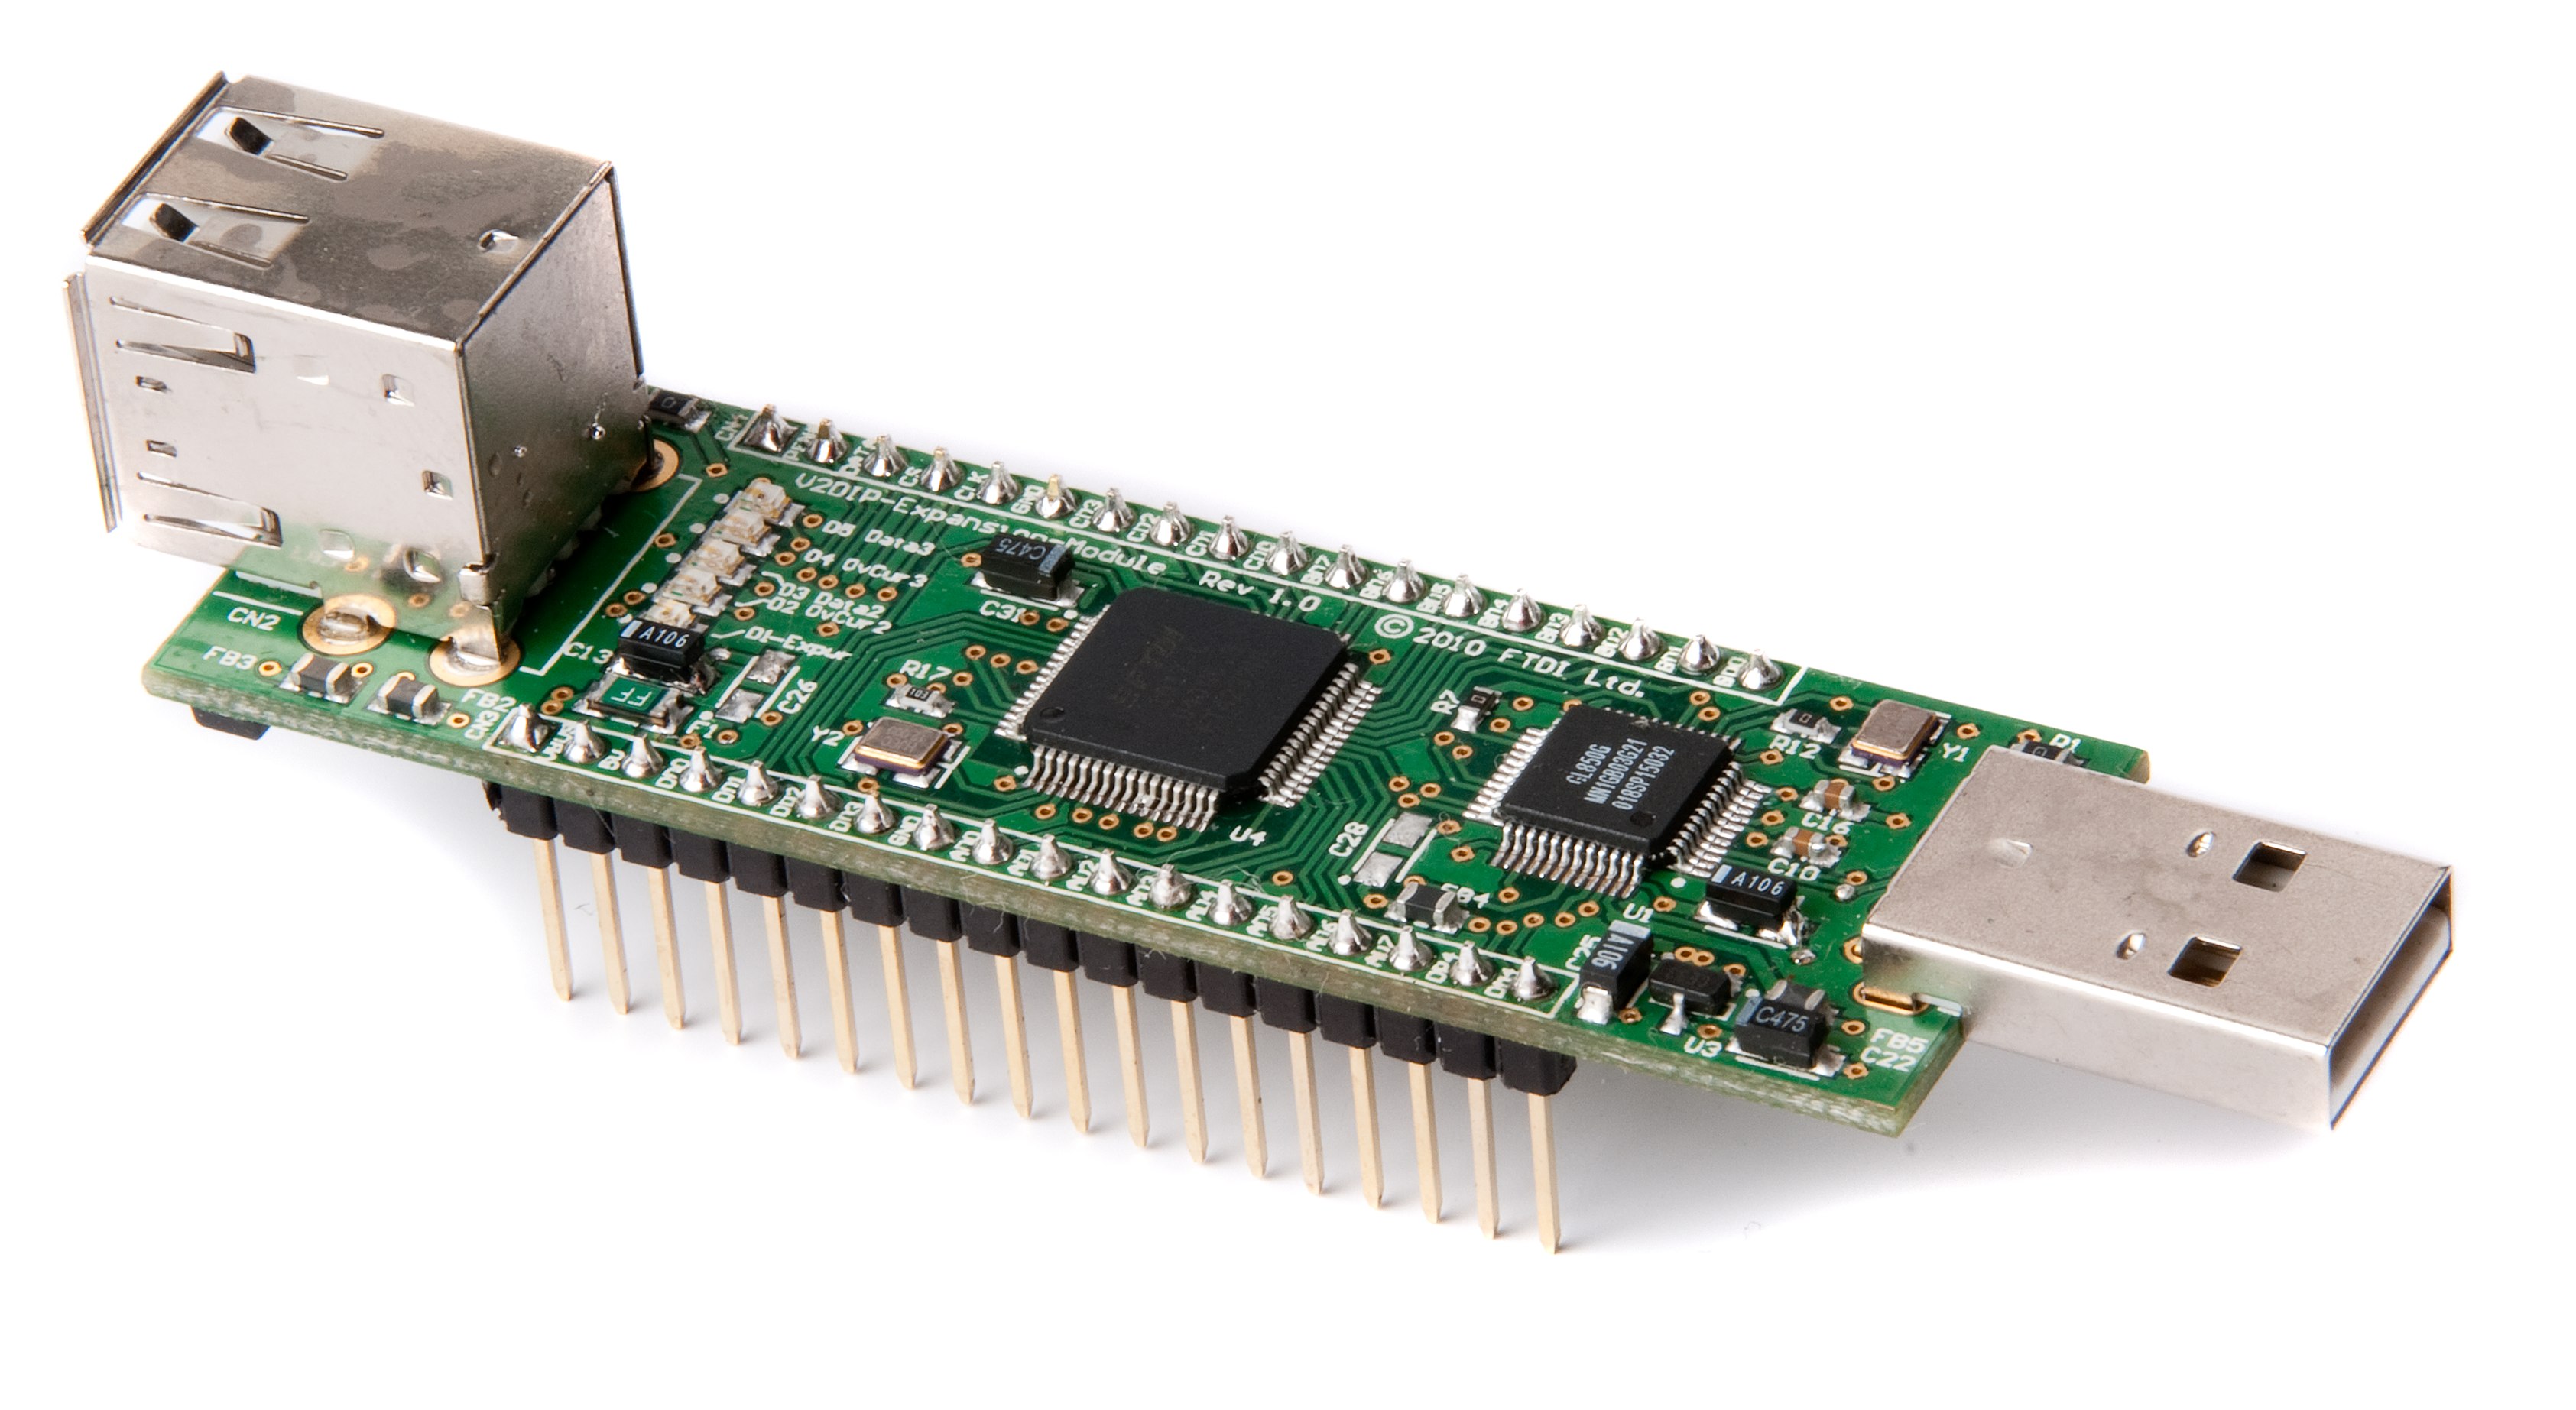 FTDI Chip USB vers UART Interface Board pour FT234XD LC234X